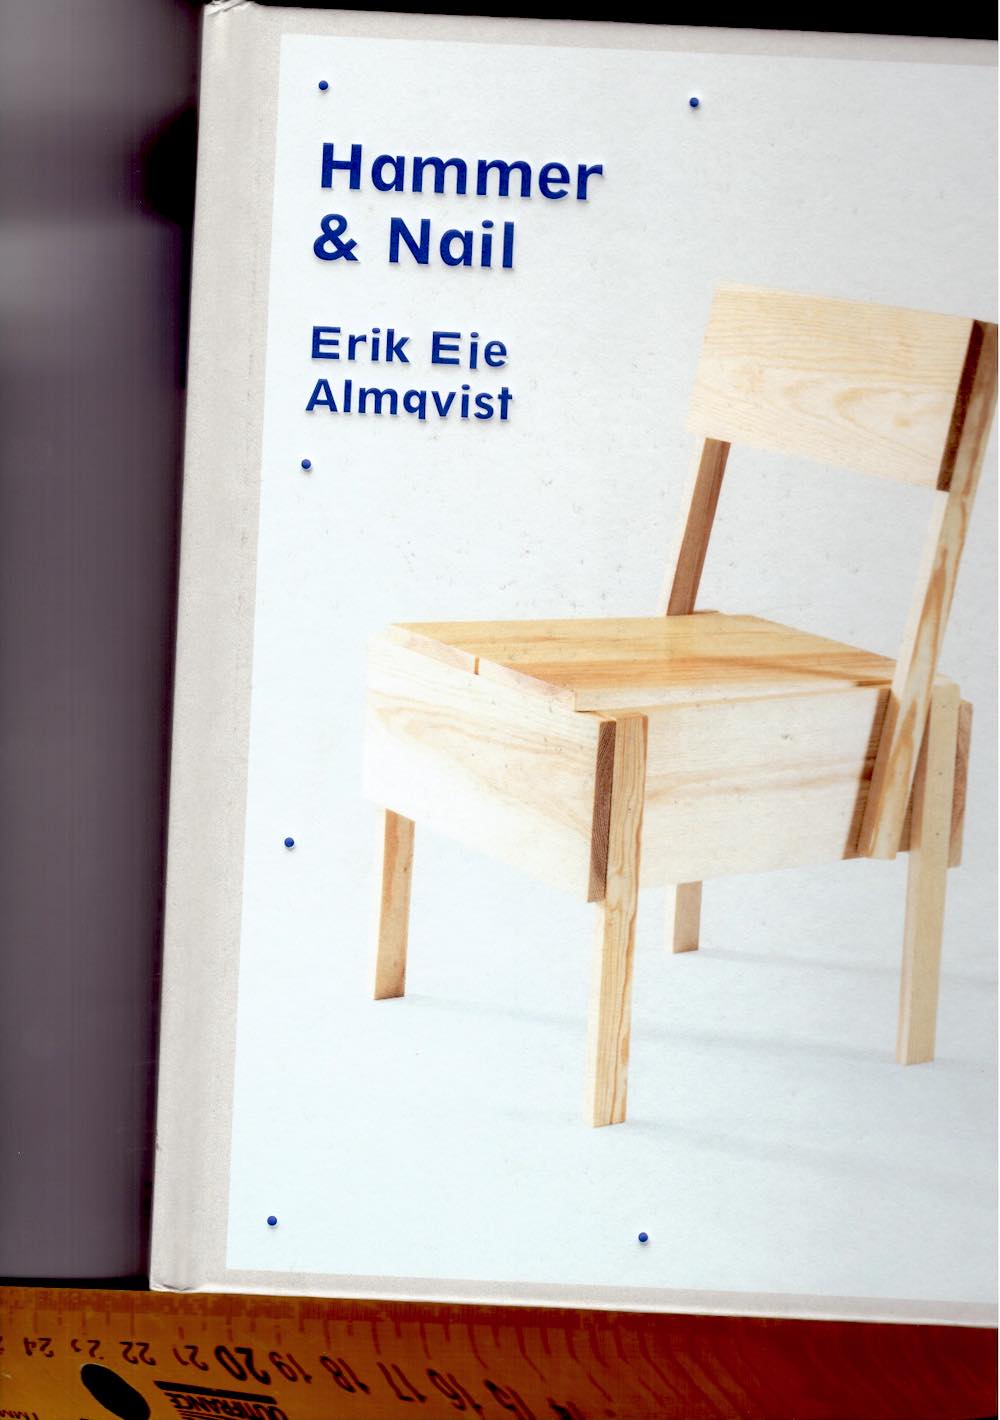 ALMQVIST, Erik Eje - Hammer & Nail: Making and assembling furniture designs inspired by Enzo Mari